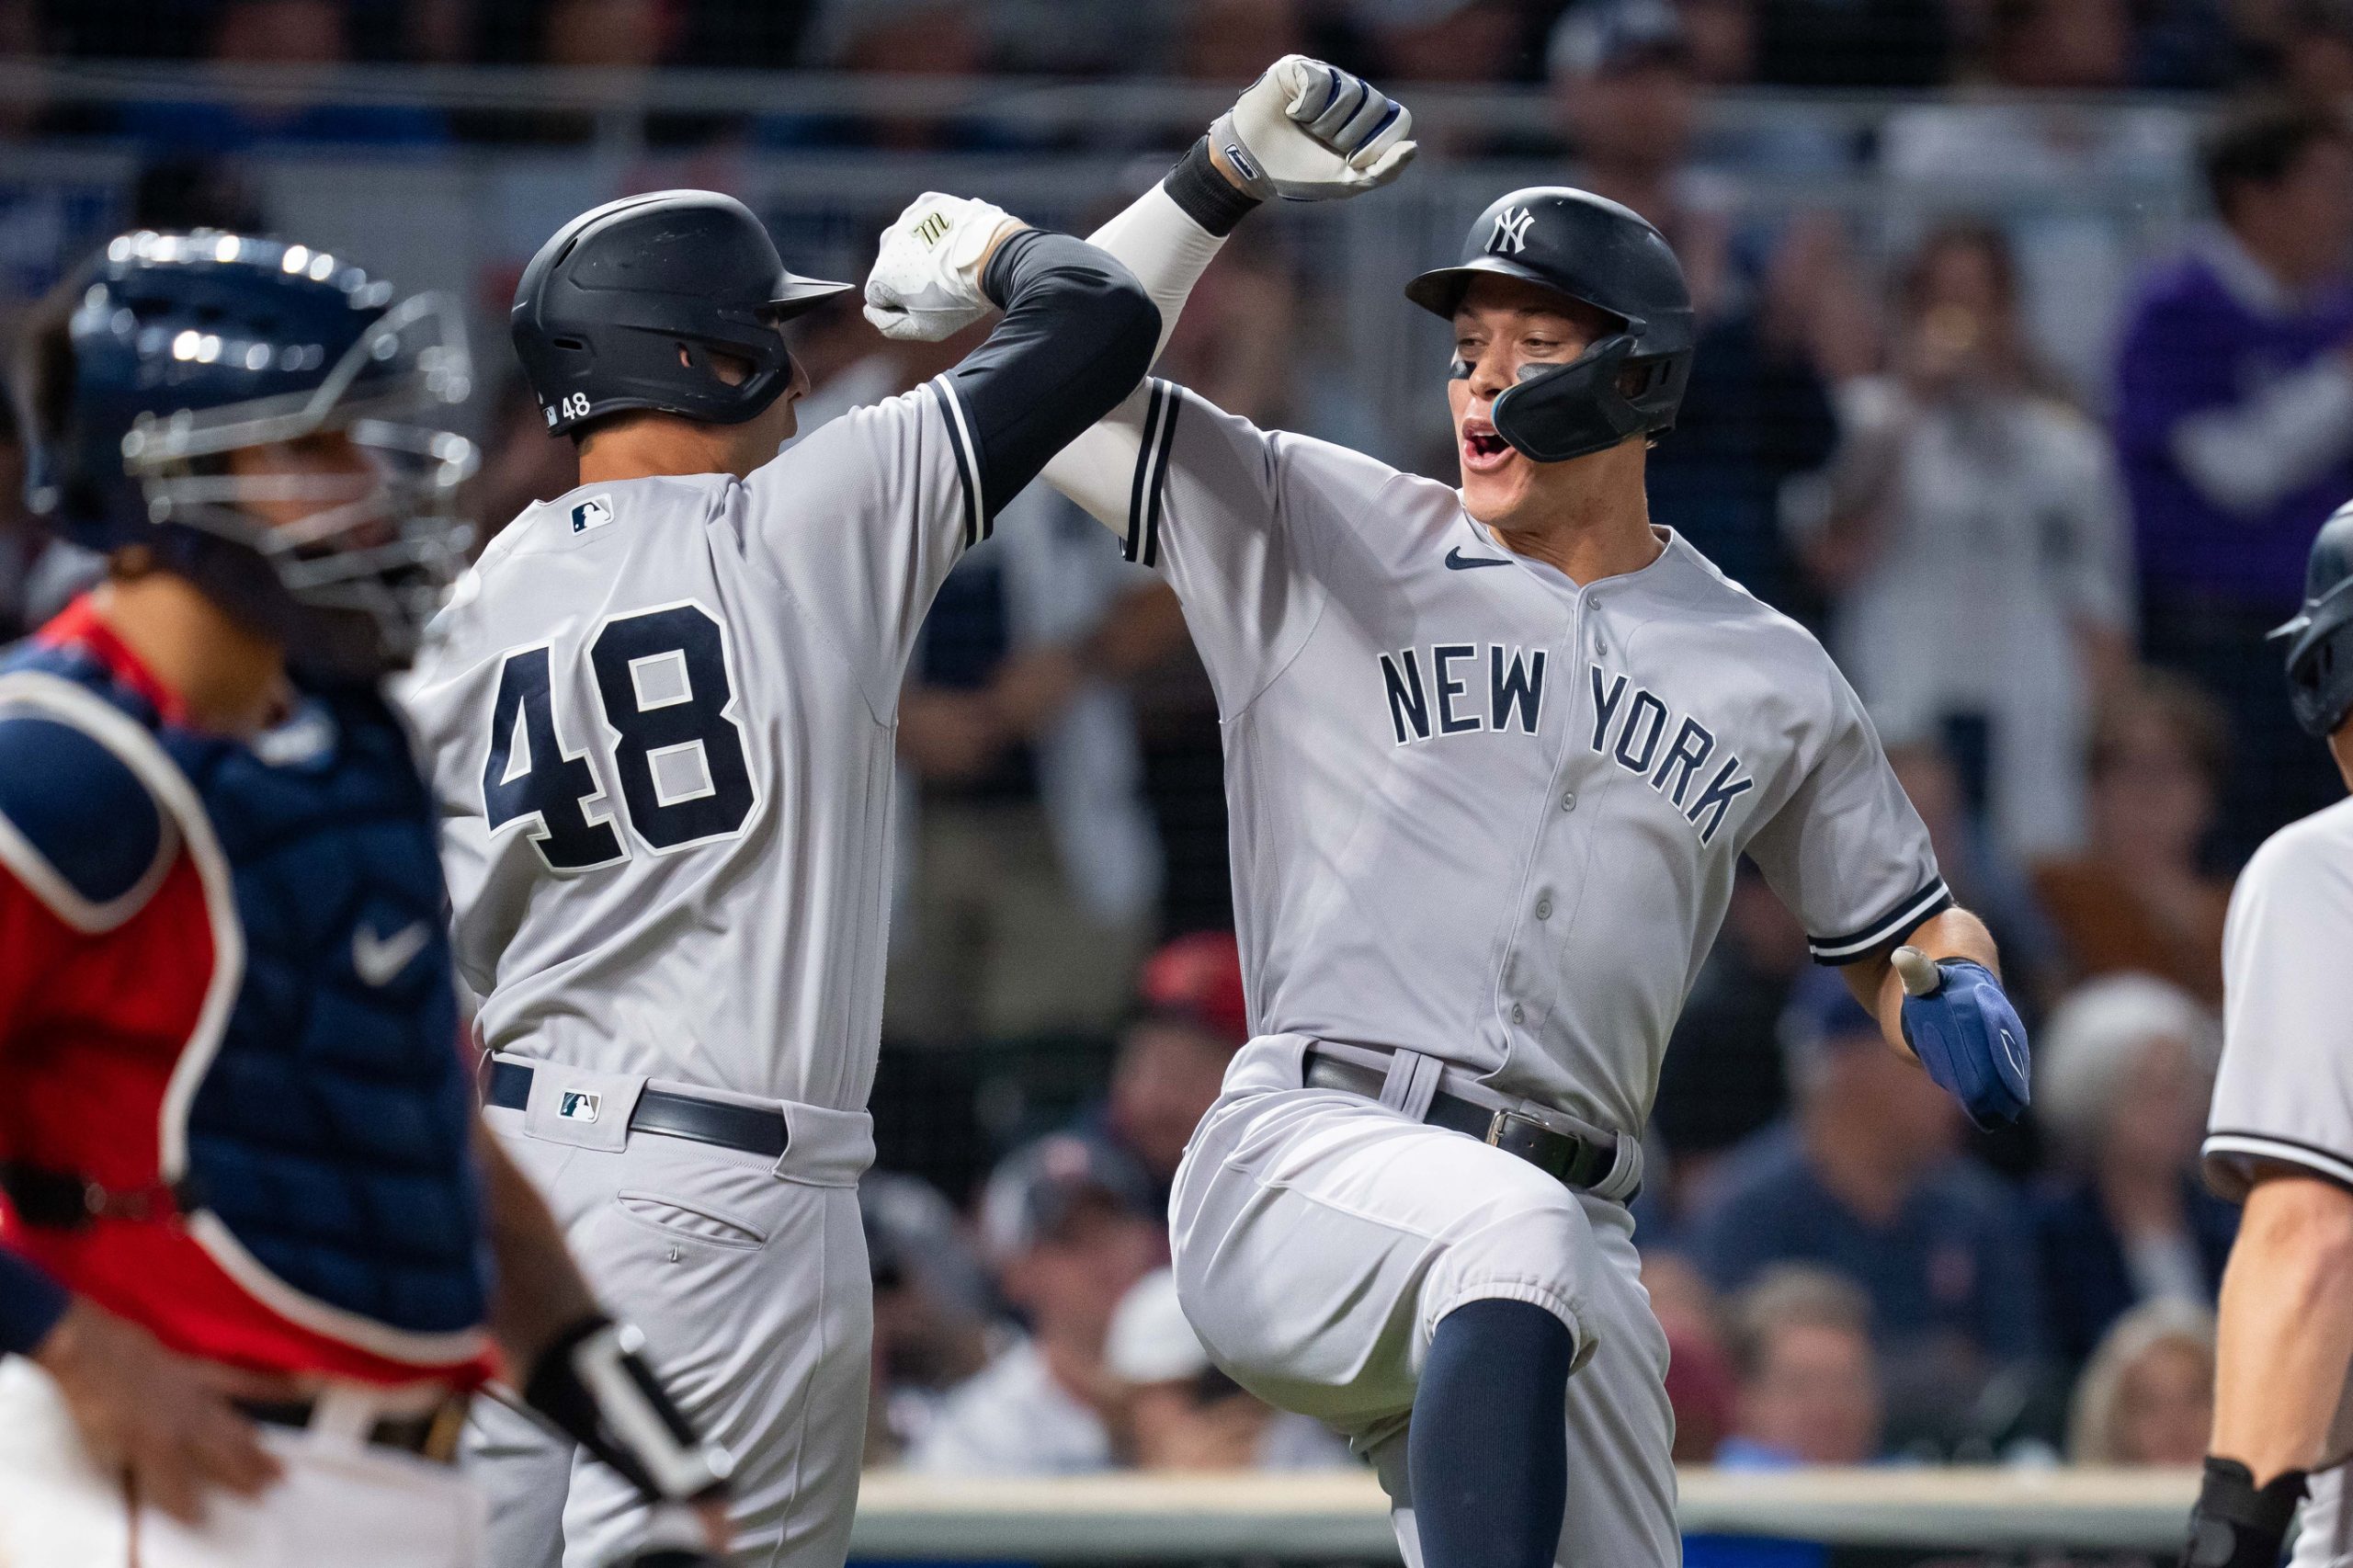 MLB Sunday three-team mega parlay (+873 odds): Yankees to pile on